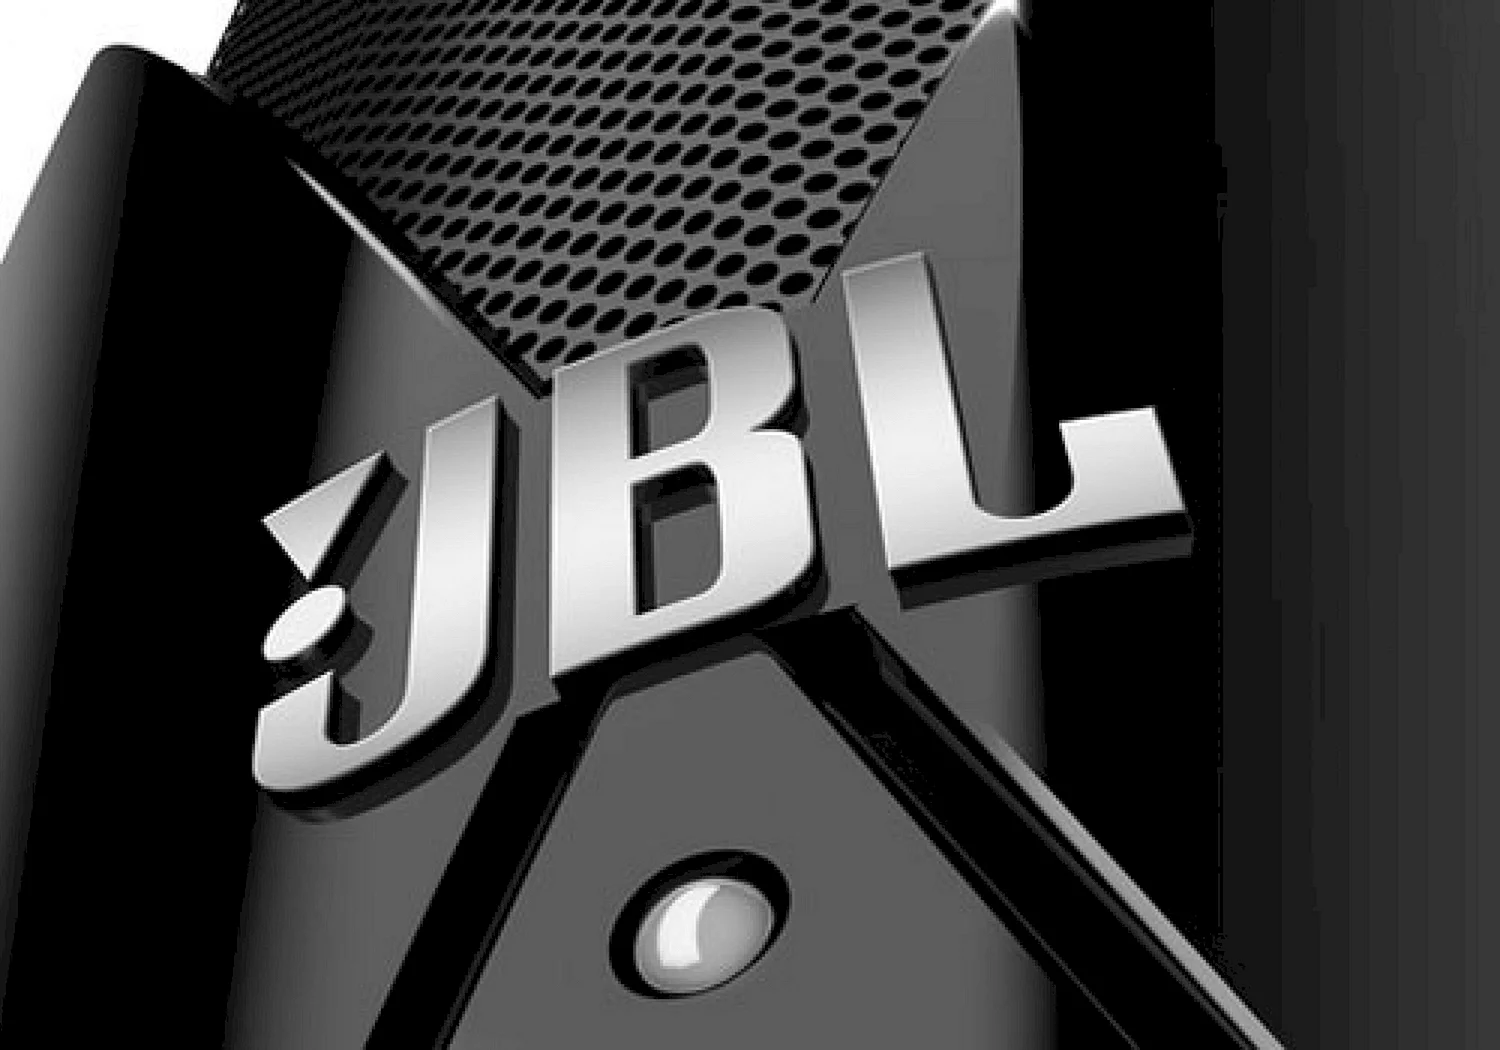 JBL logo